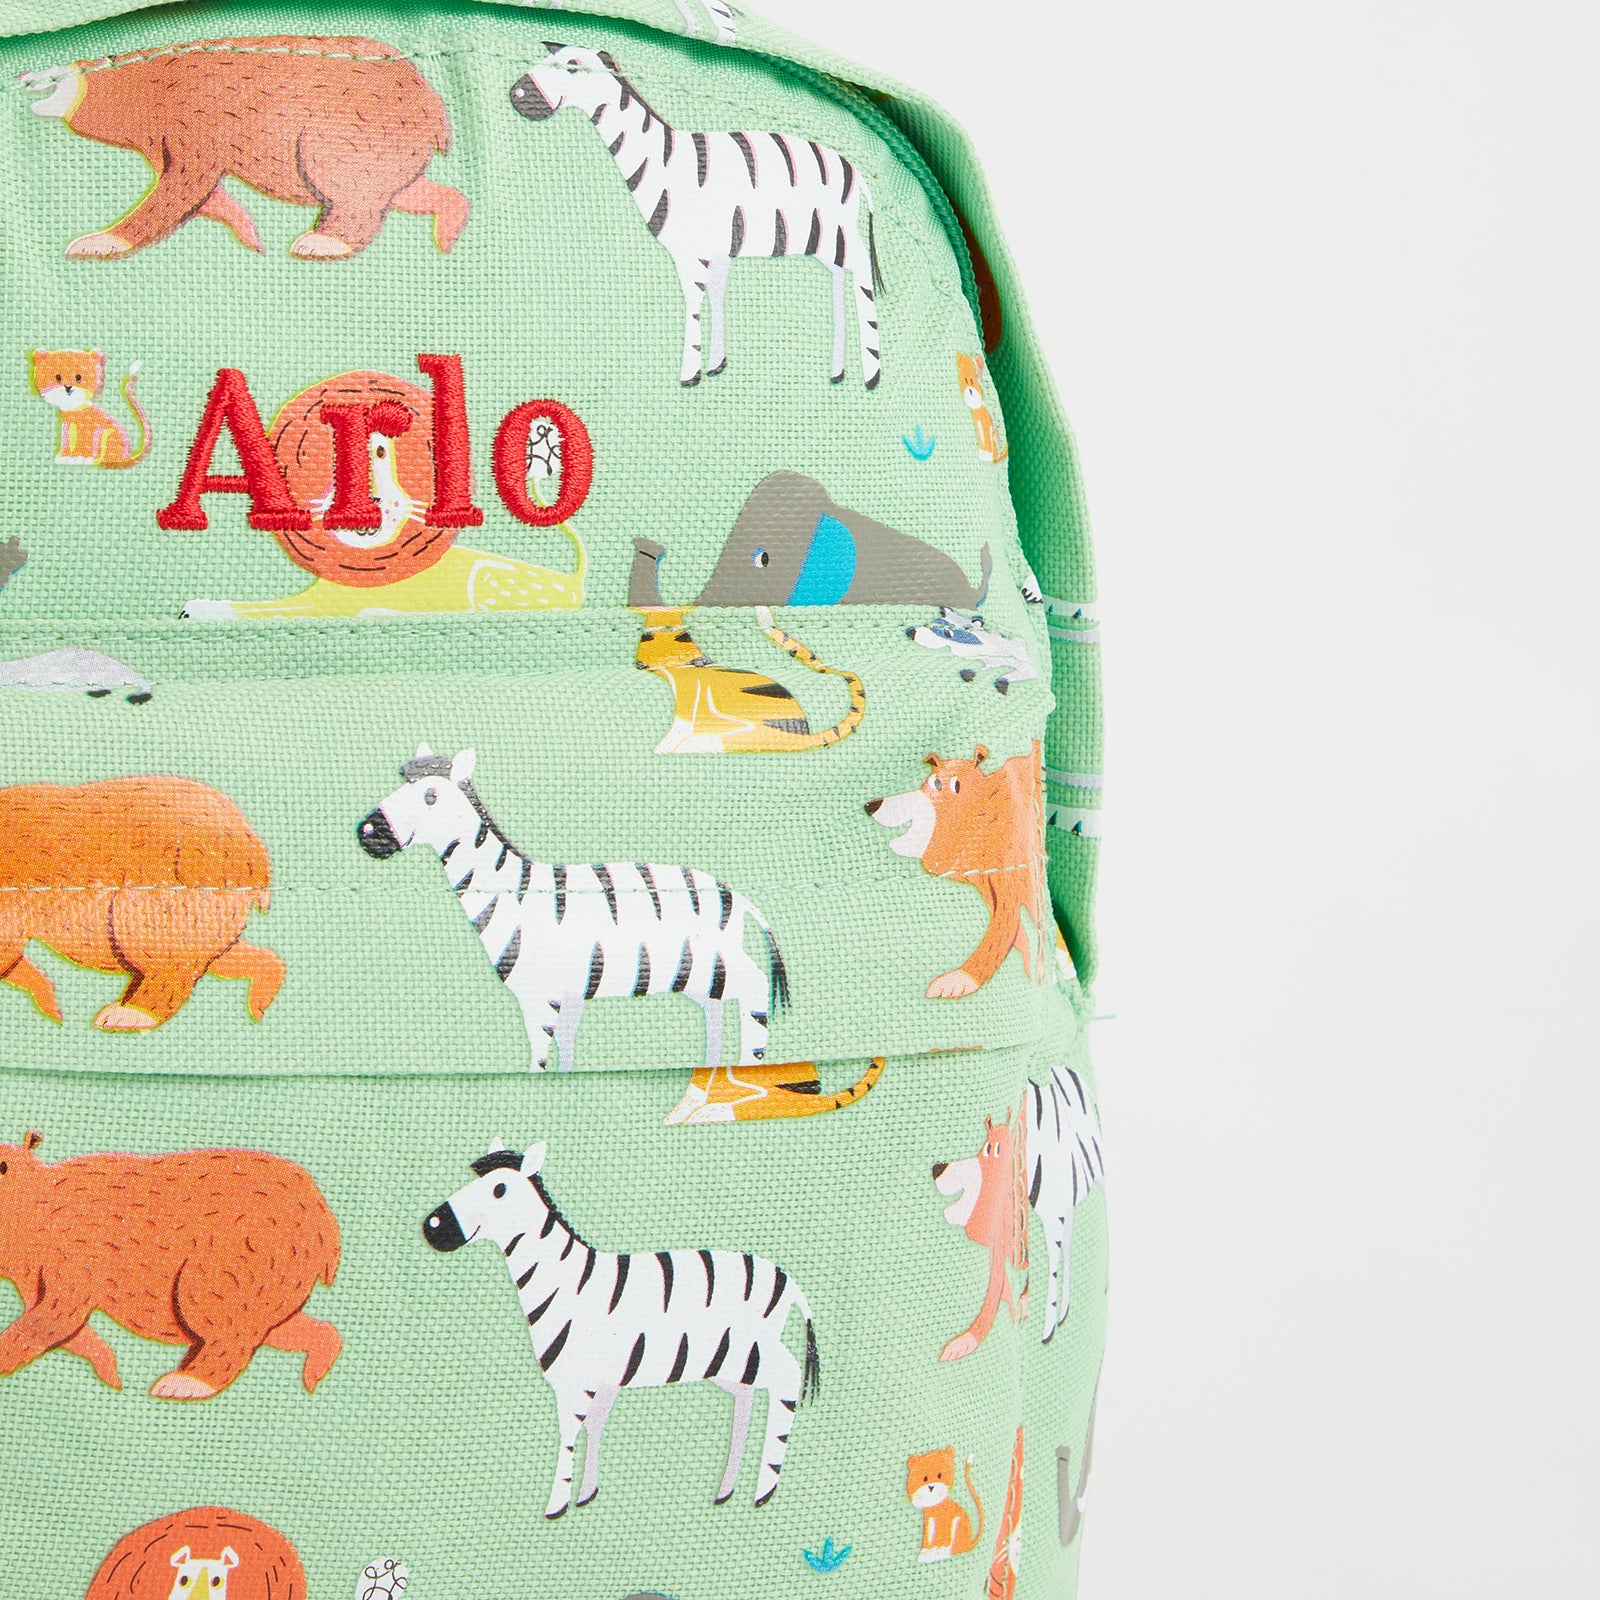 Embroidered Mini Animal Safari Backpack